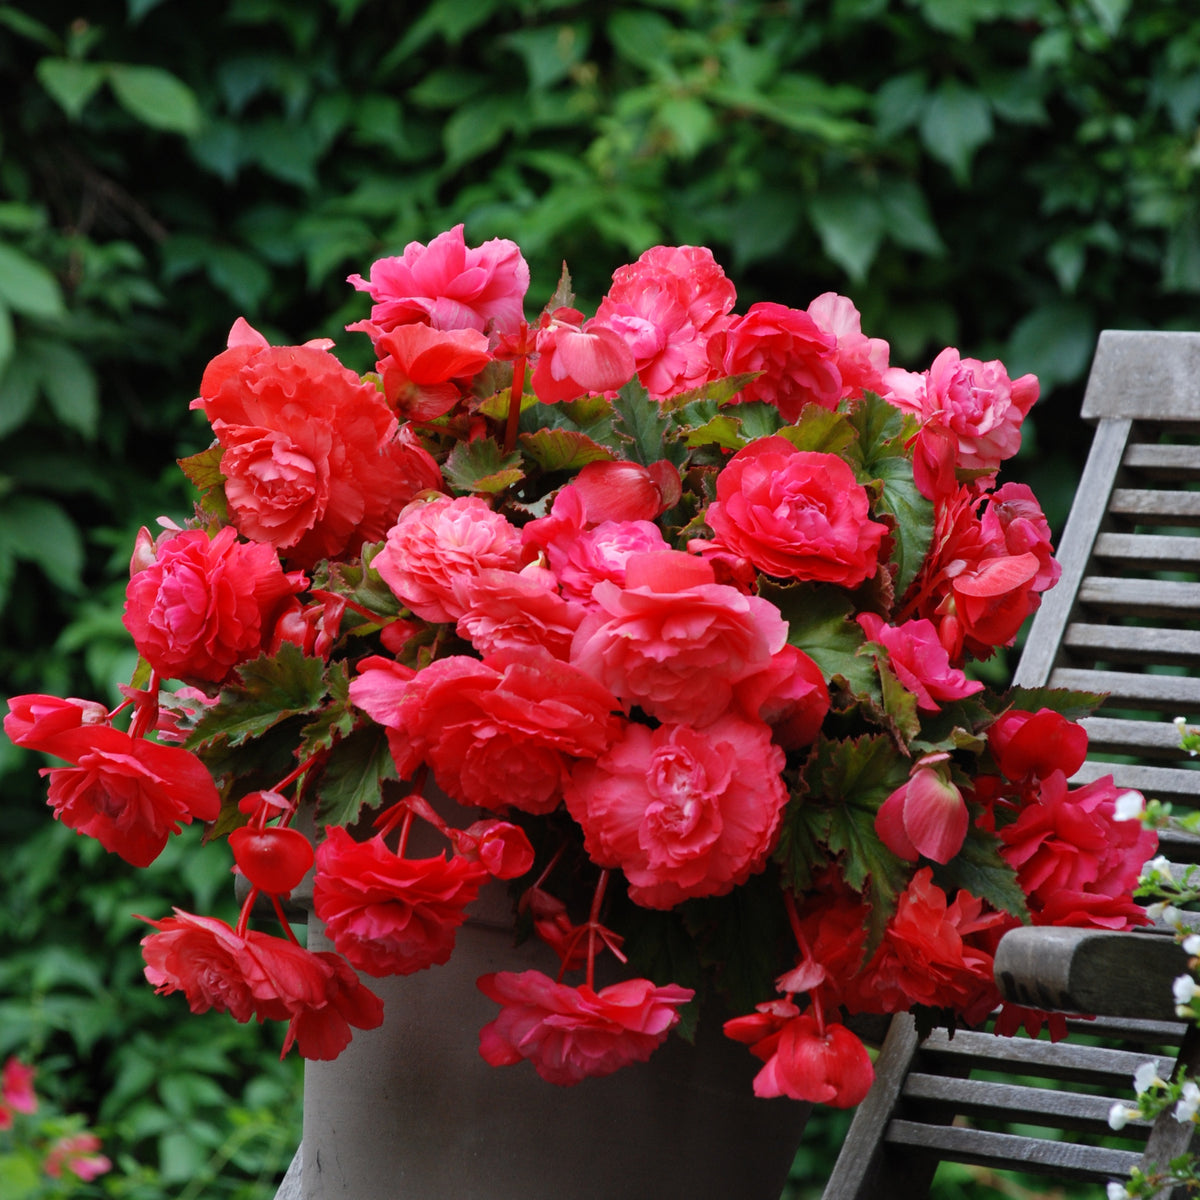 5 Bégonias retombants parfumés Pink delight - Begonia odorata pink delight - Bulbes à fleurs